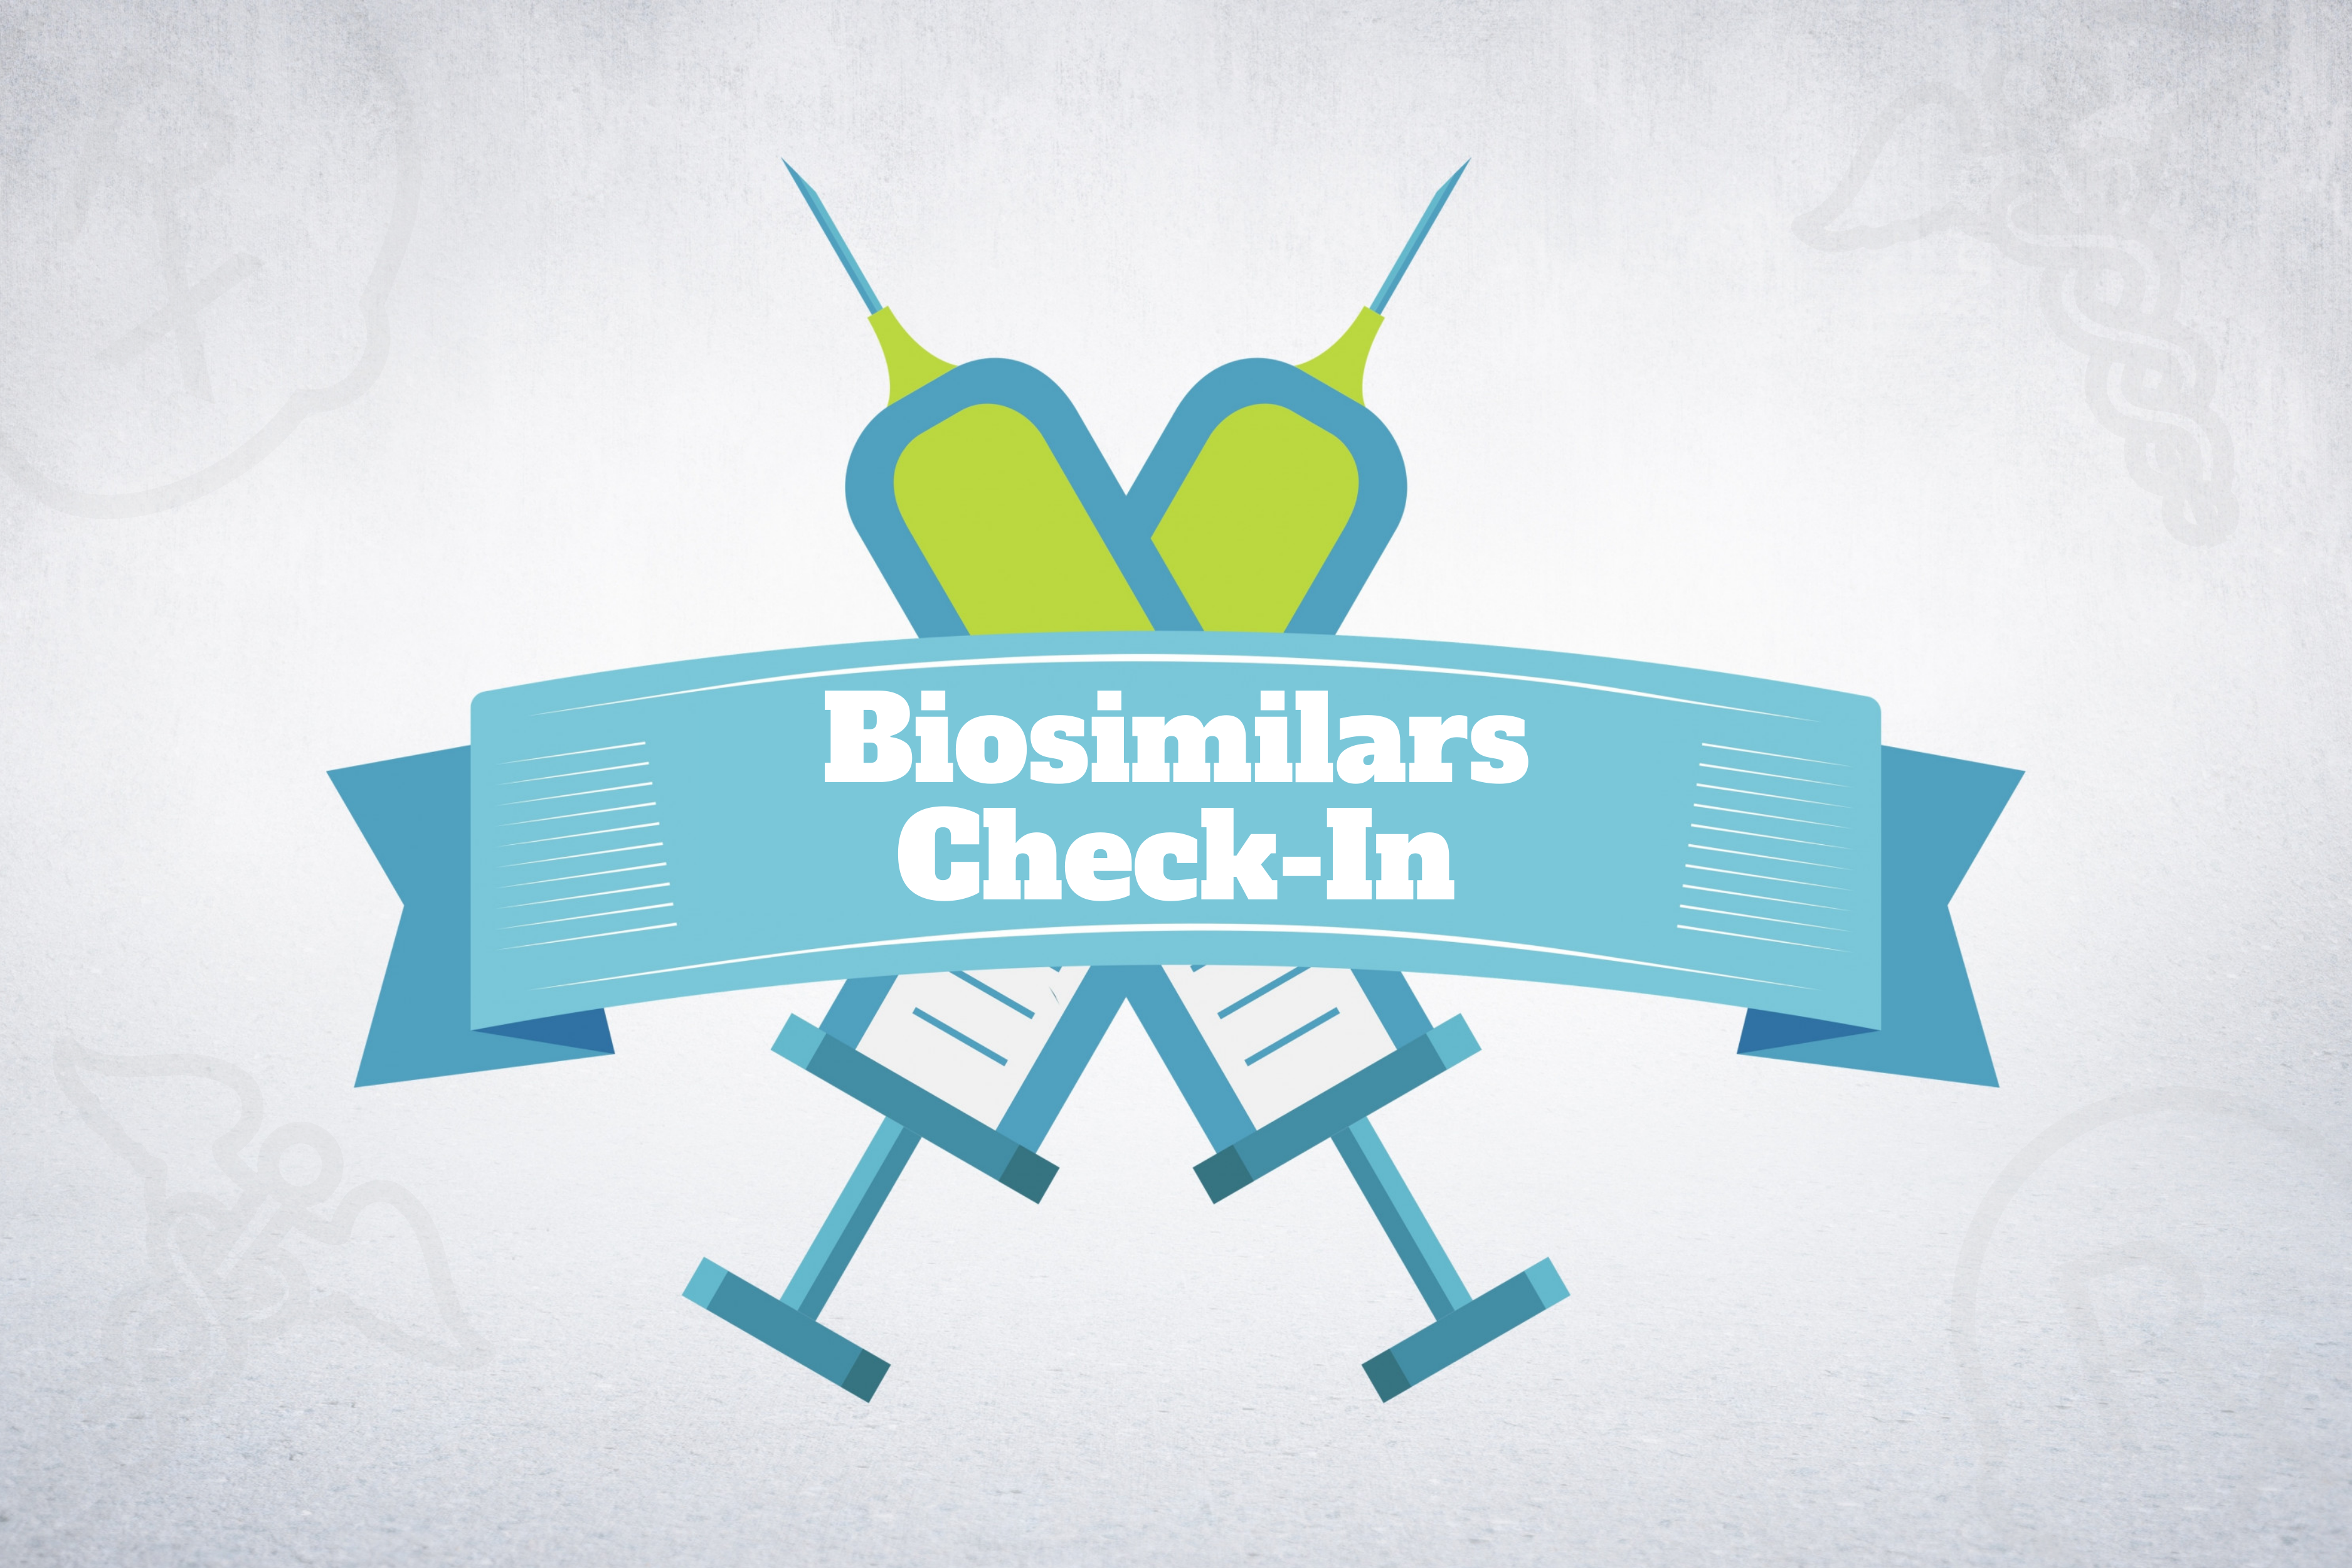 biosimilars check-in banner